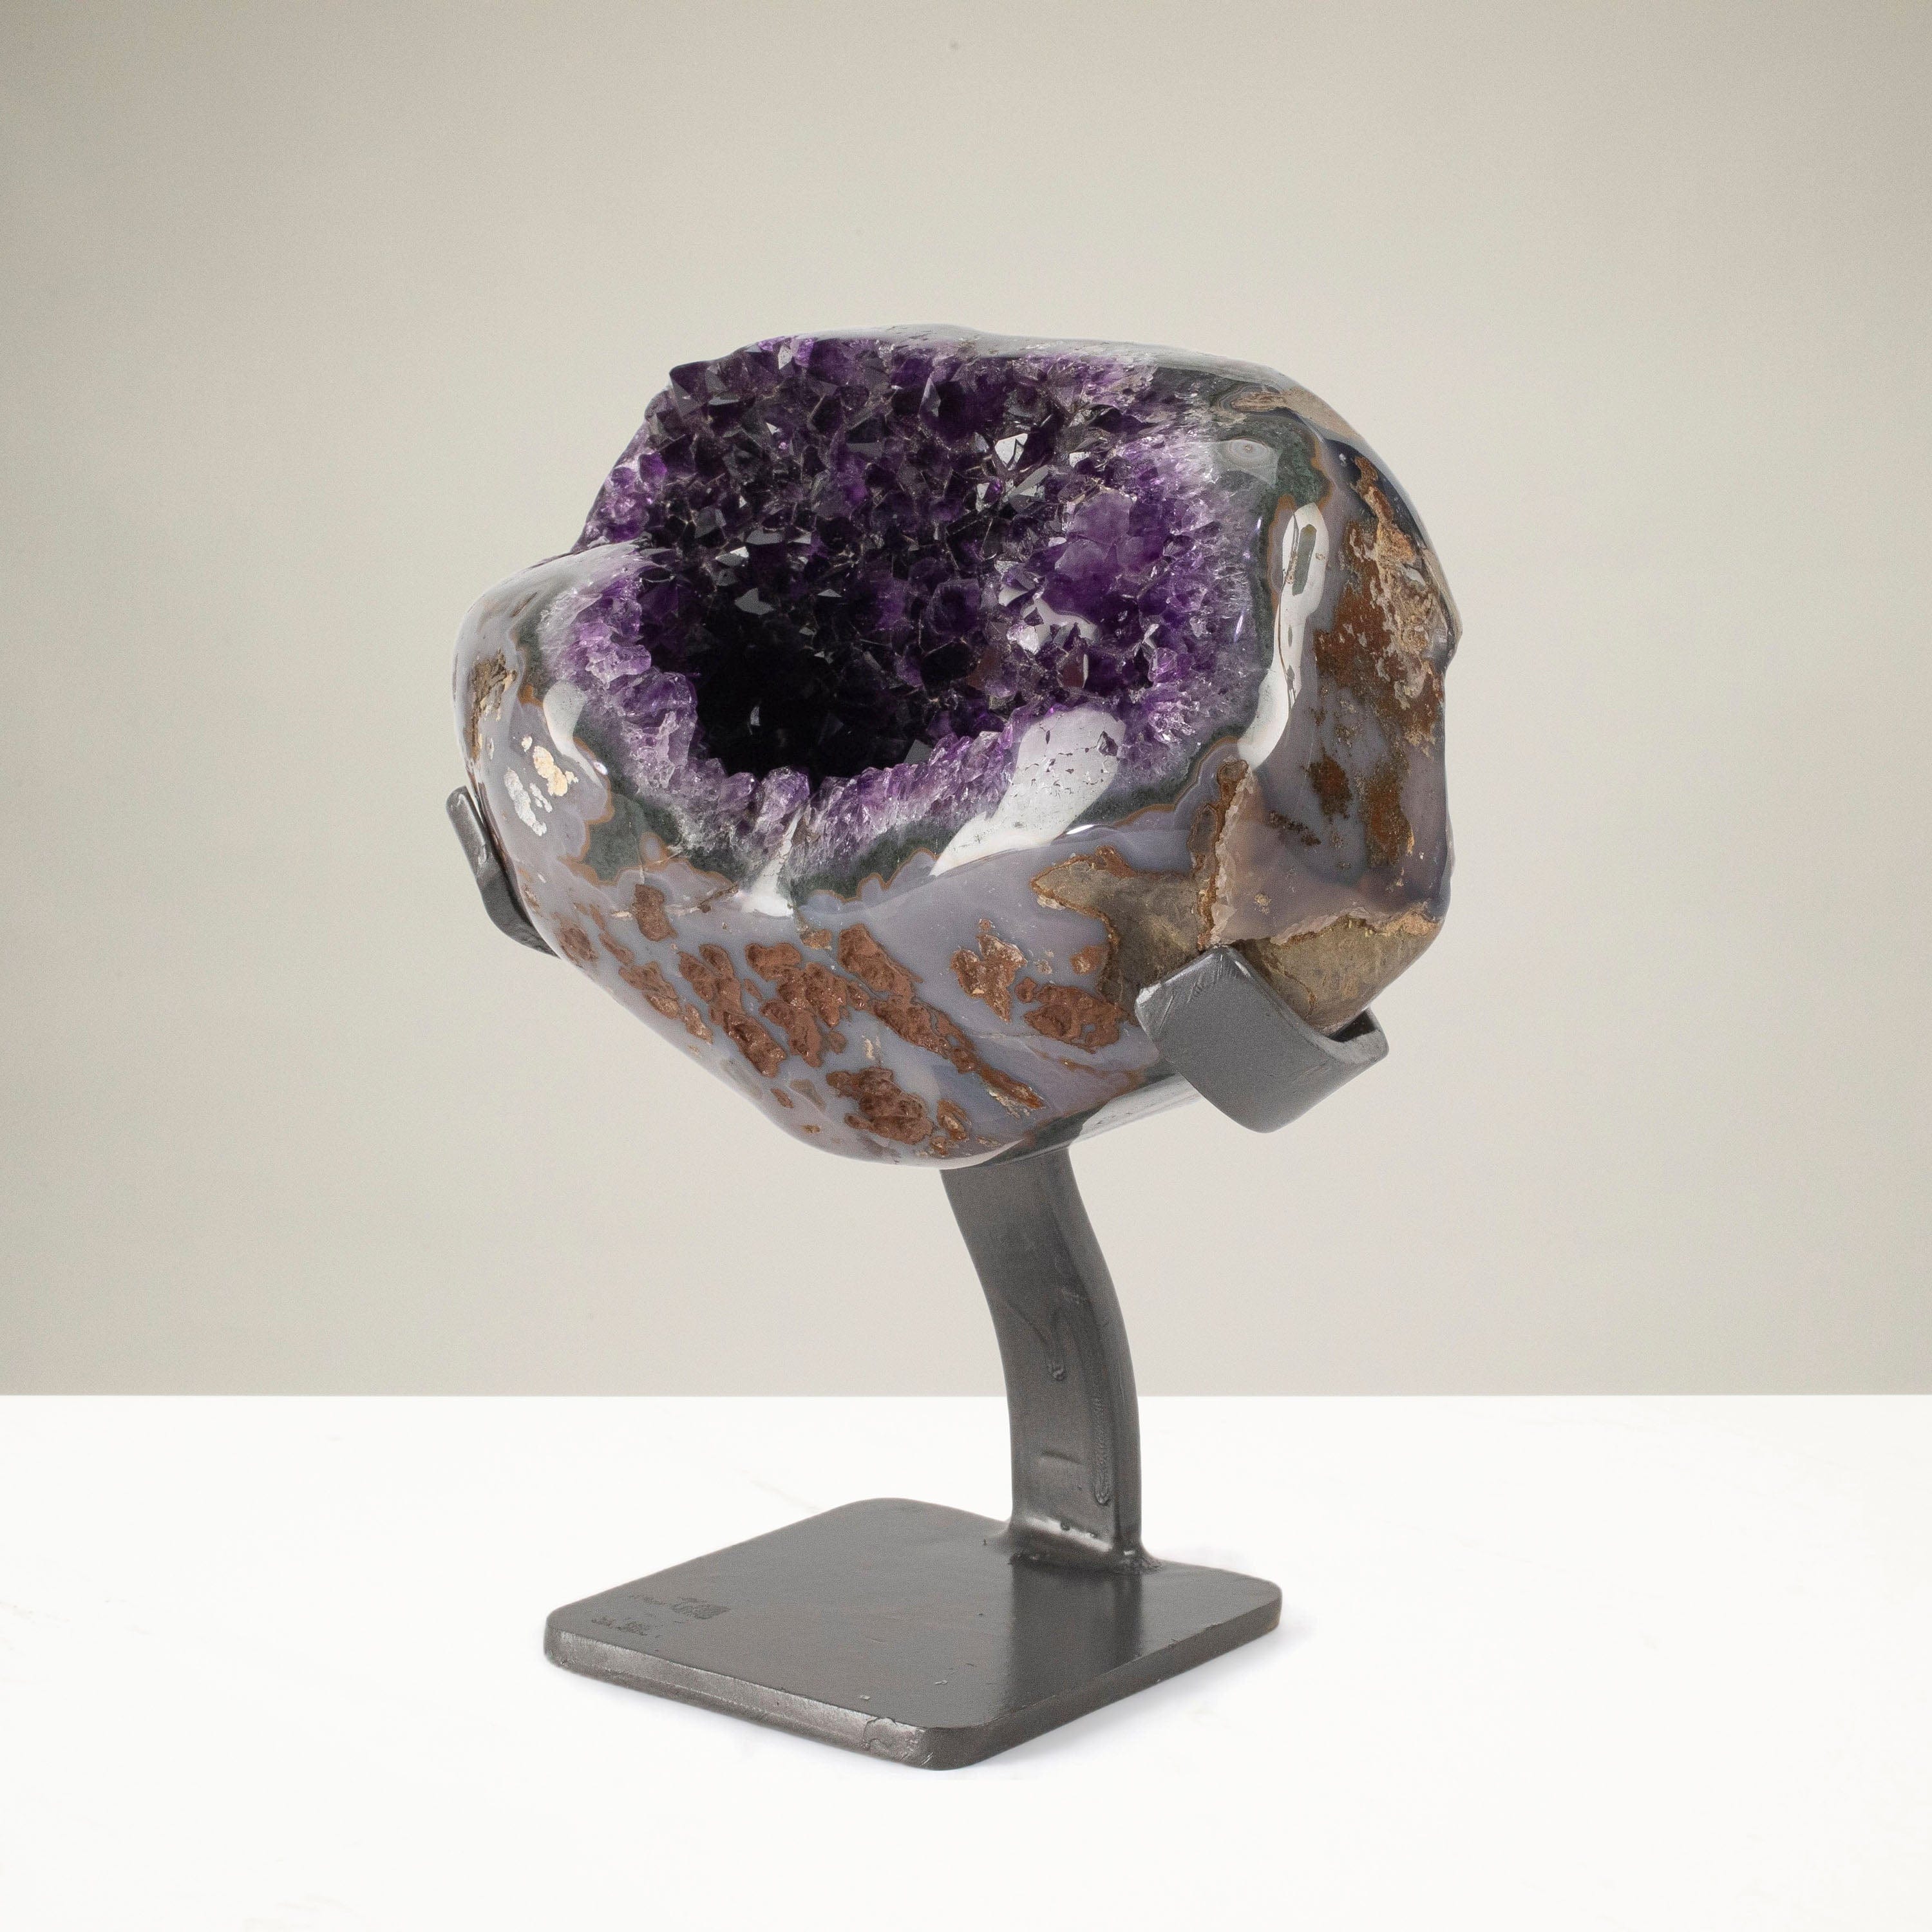 Kalifano Amethyst Uruguayan Amethyst Geode on Custom Stand - 6.4 lbs / 8.5 in. UAG2900.017